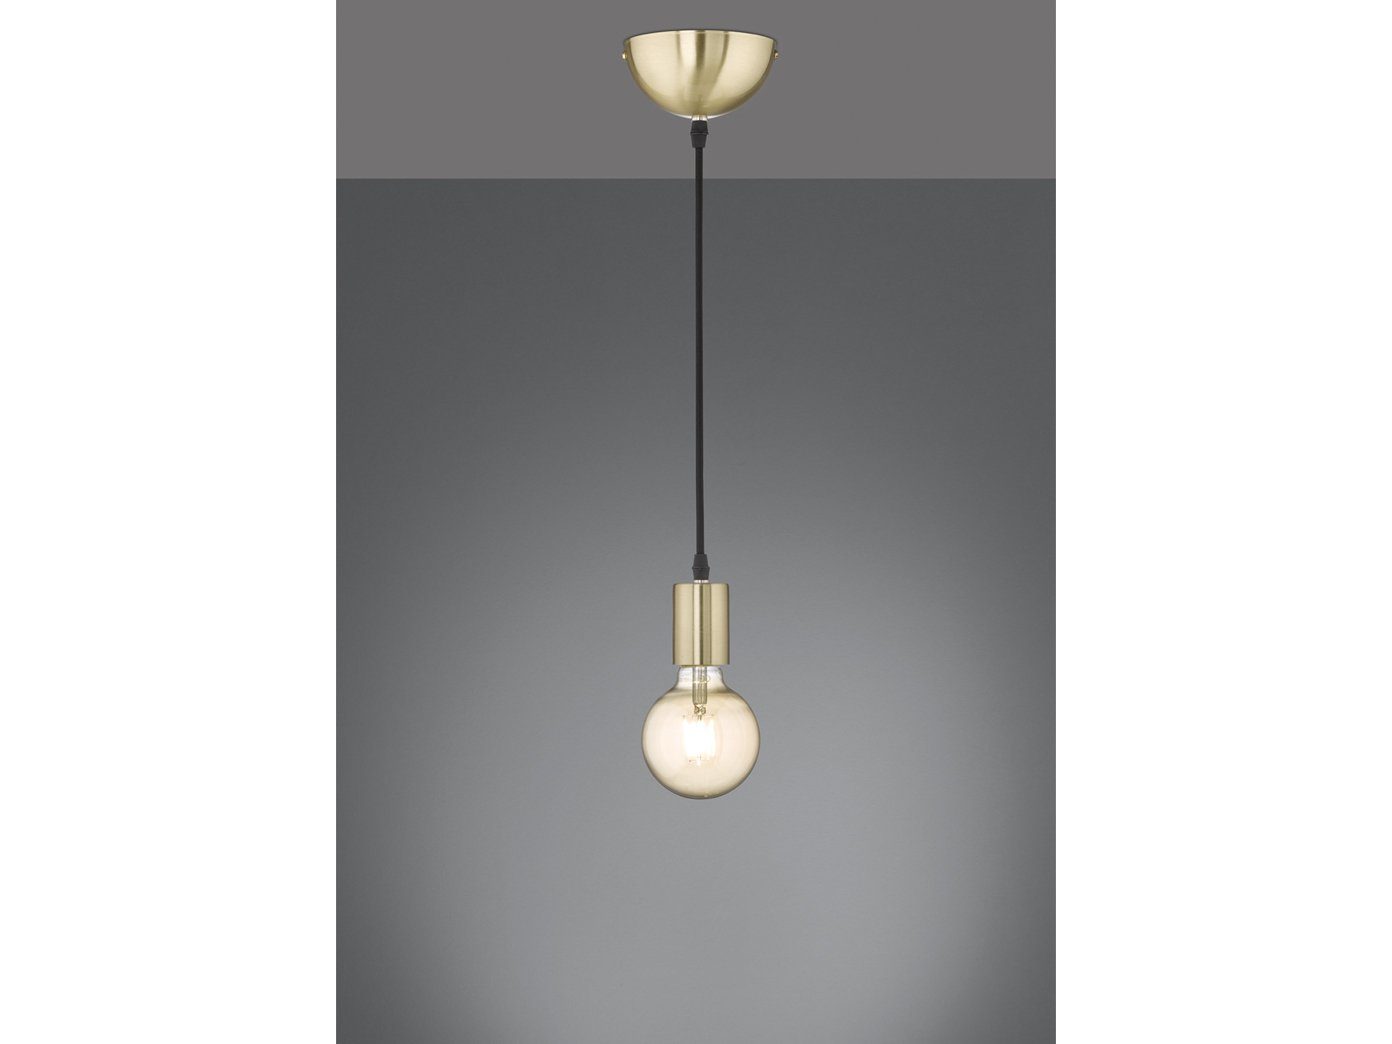 LED Design Pendel Leuchte Wohn Zimmer Decken Lampe Hänge Beleuchtung Edelstahl 